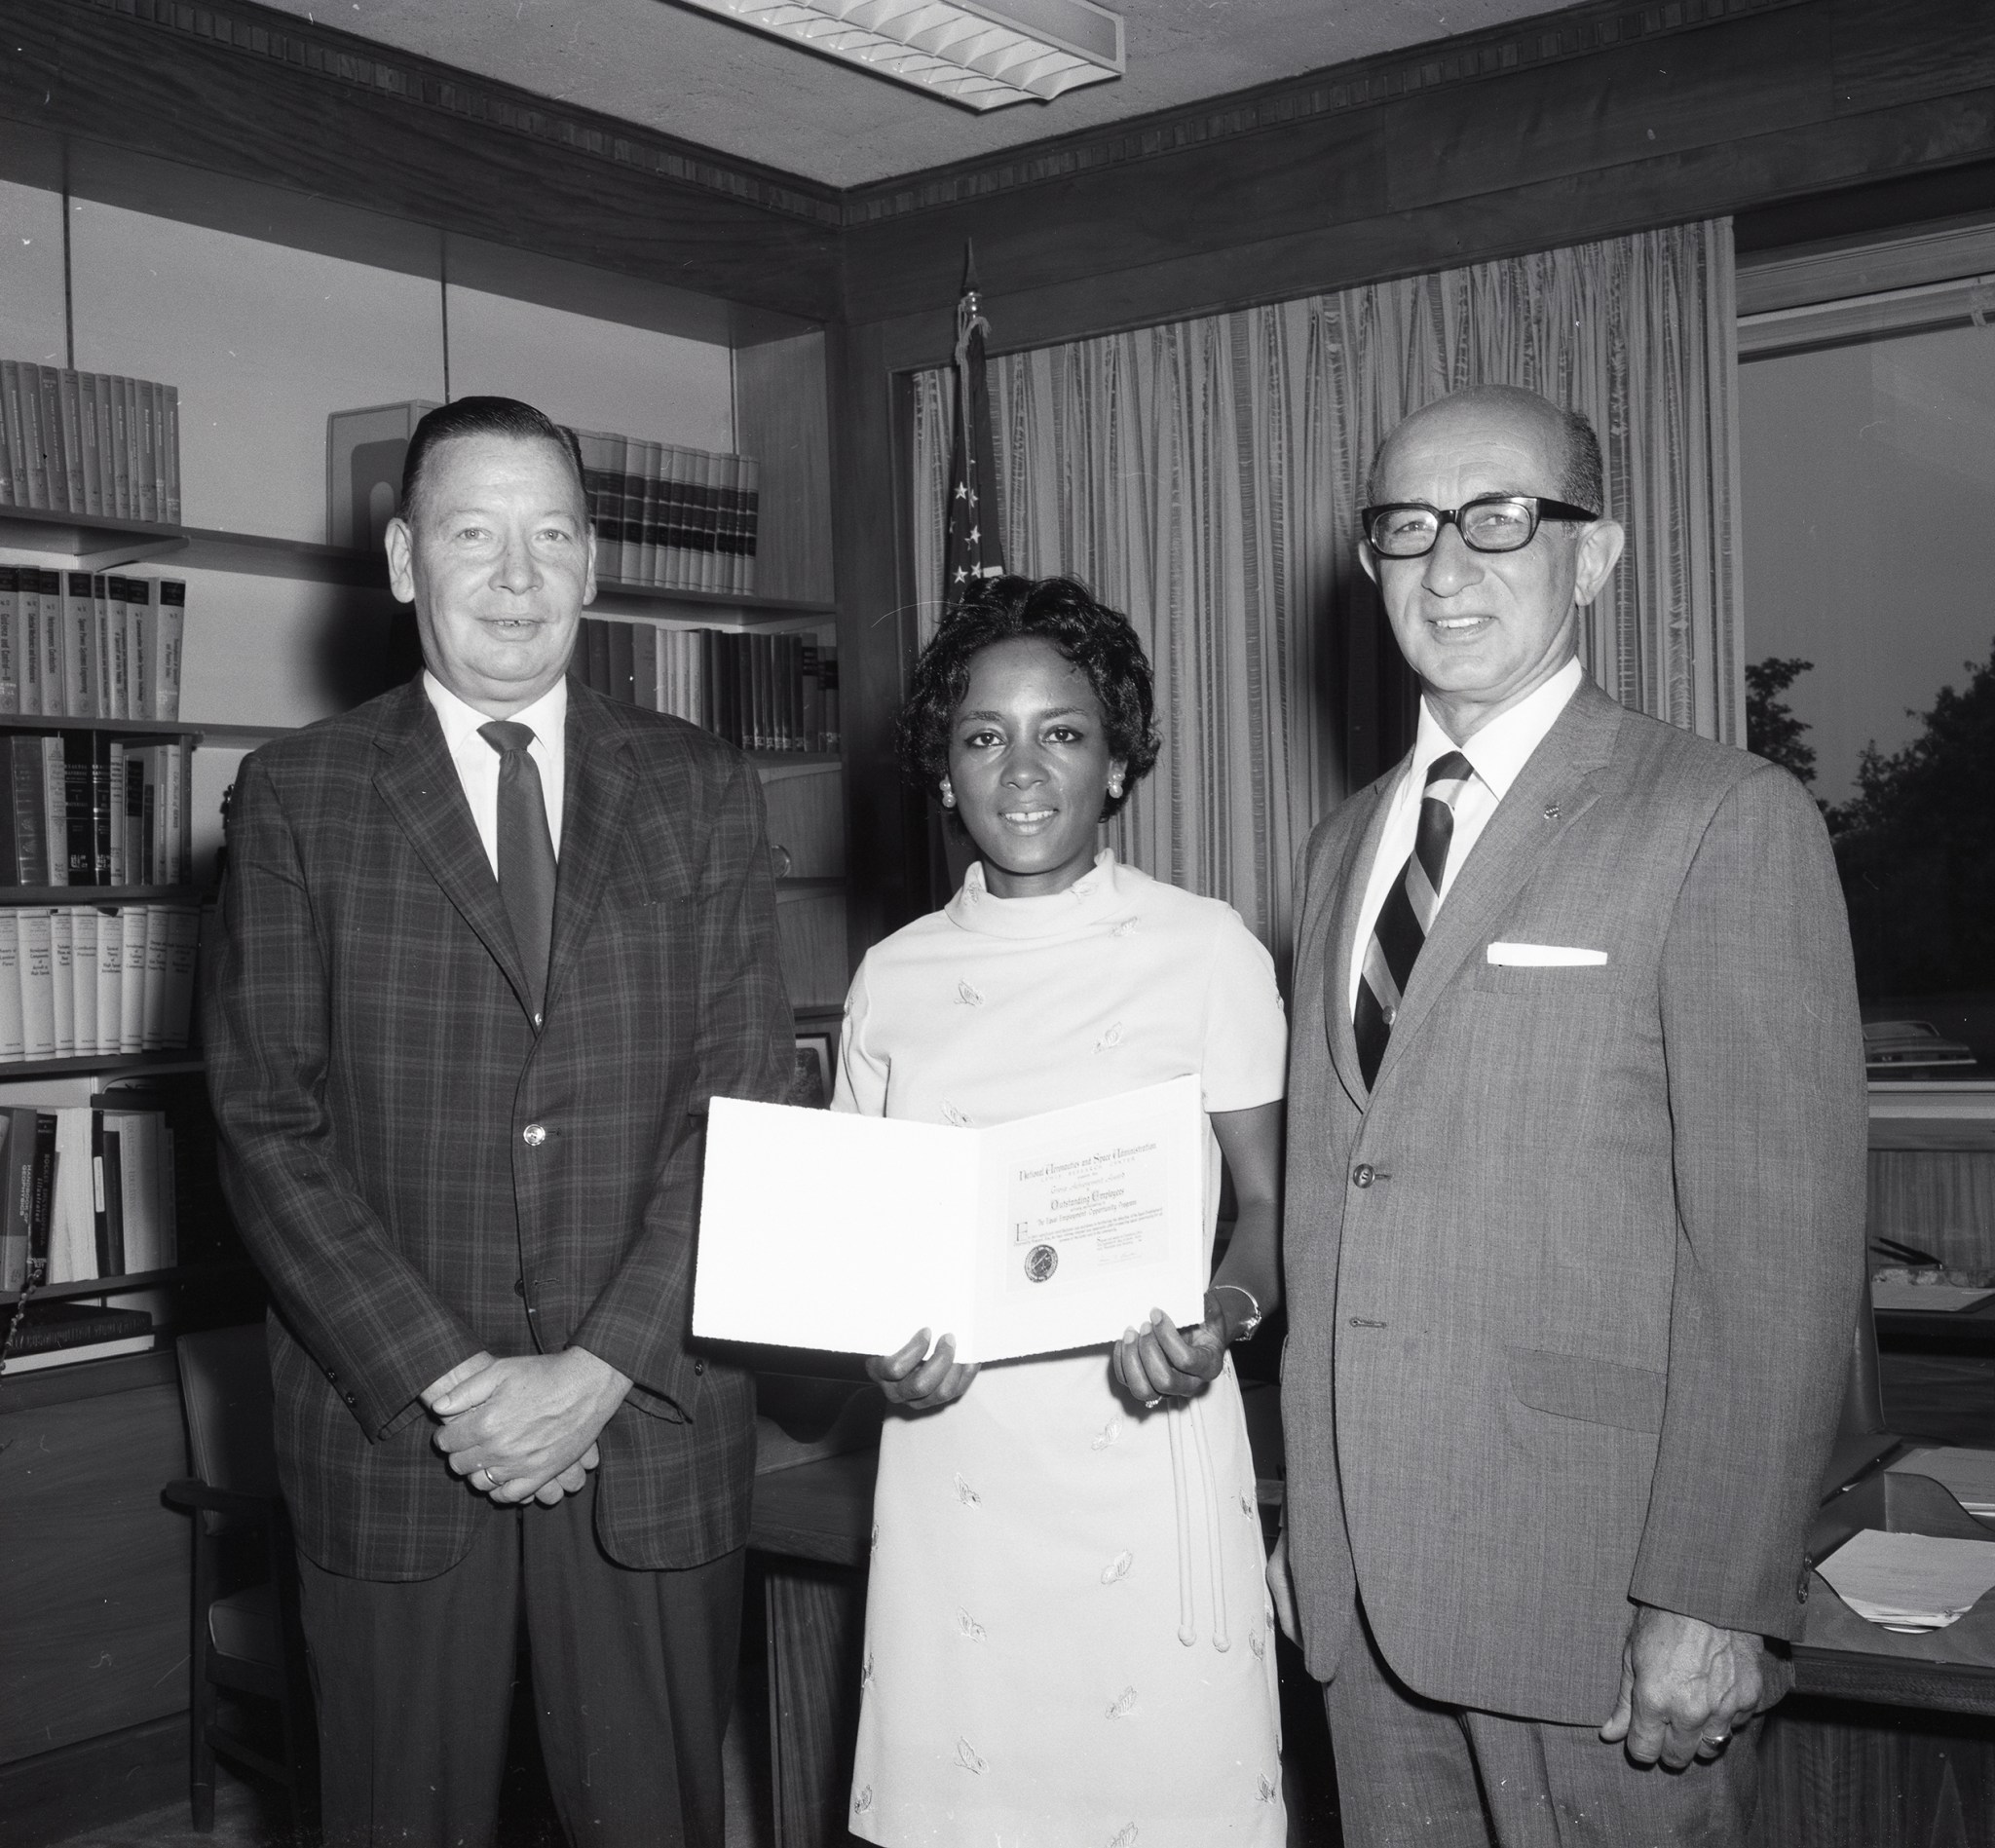 Woman holding award, standing between two men.